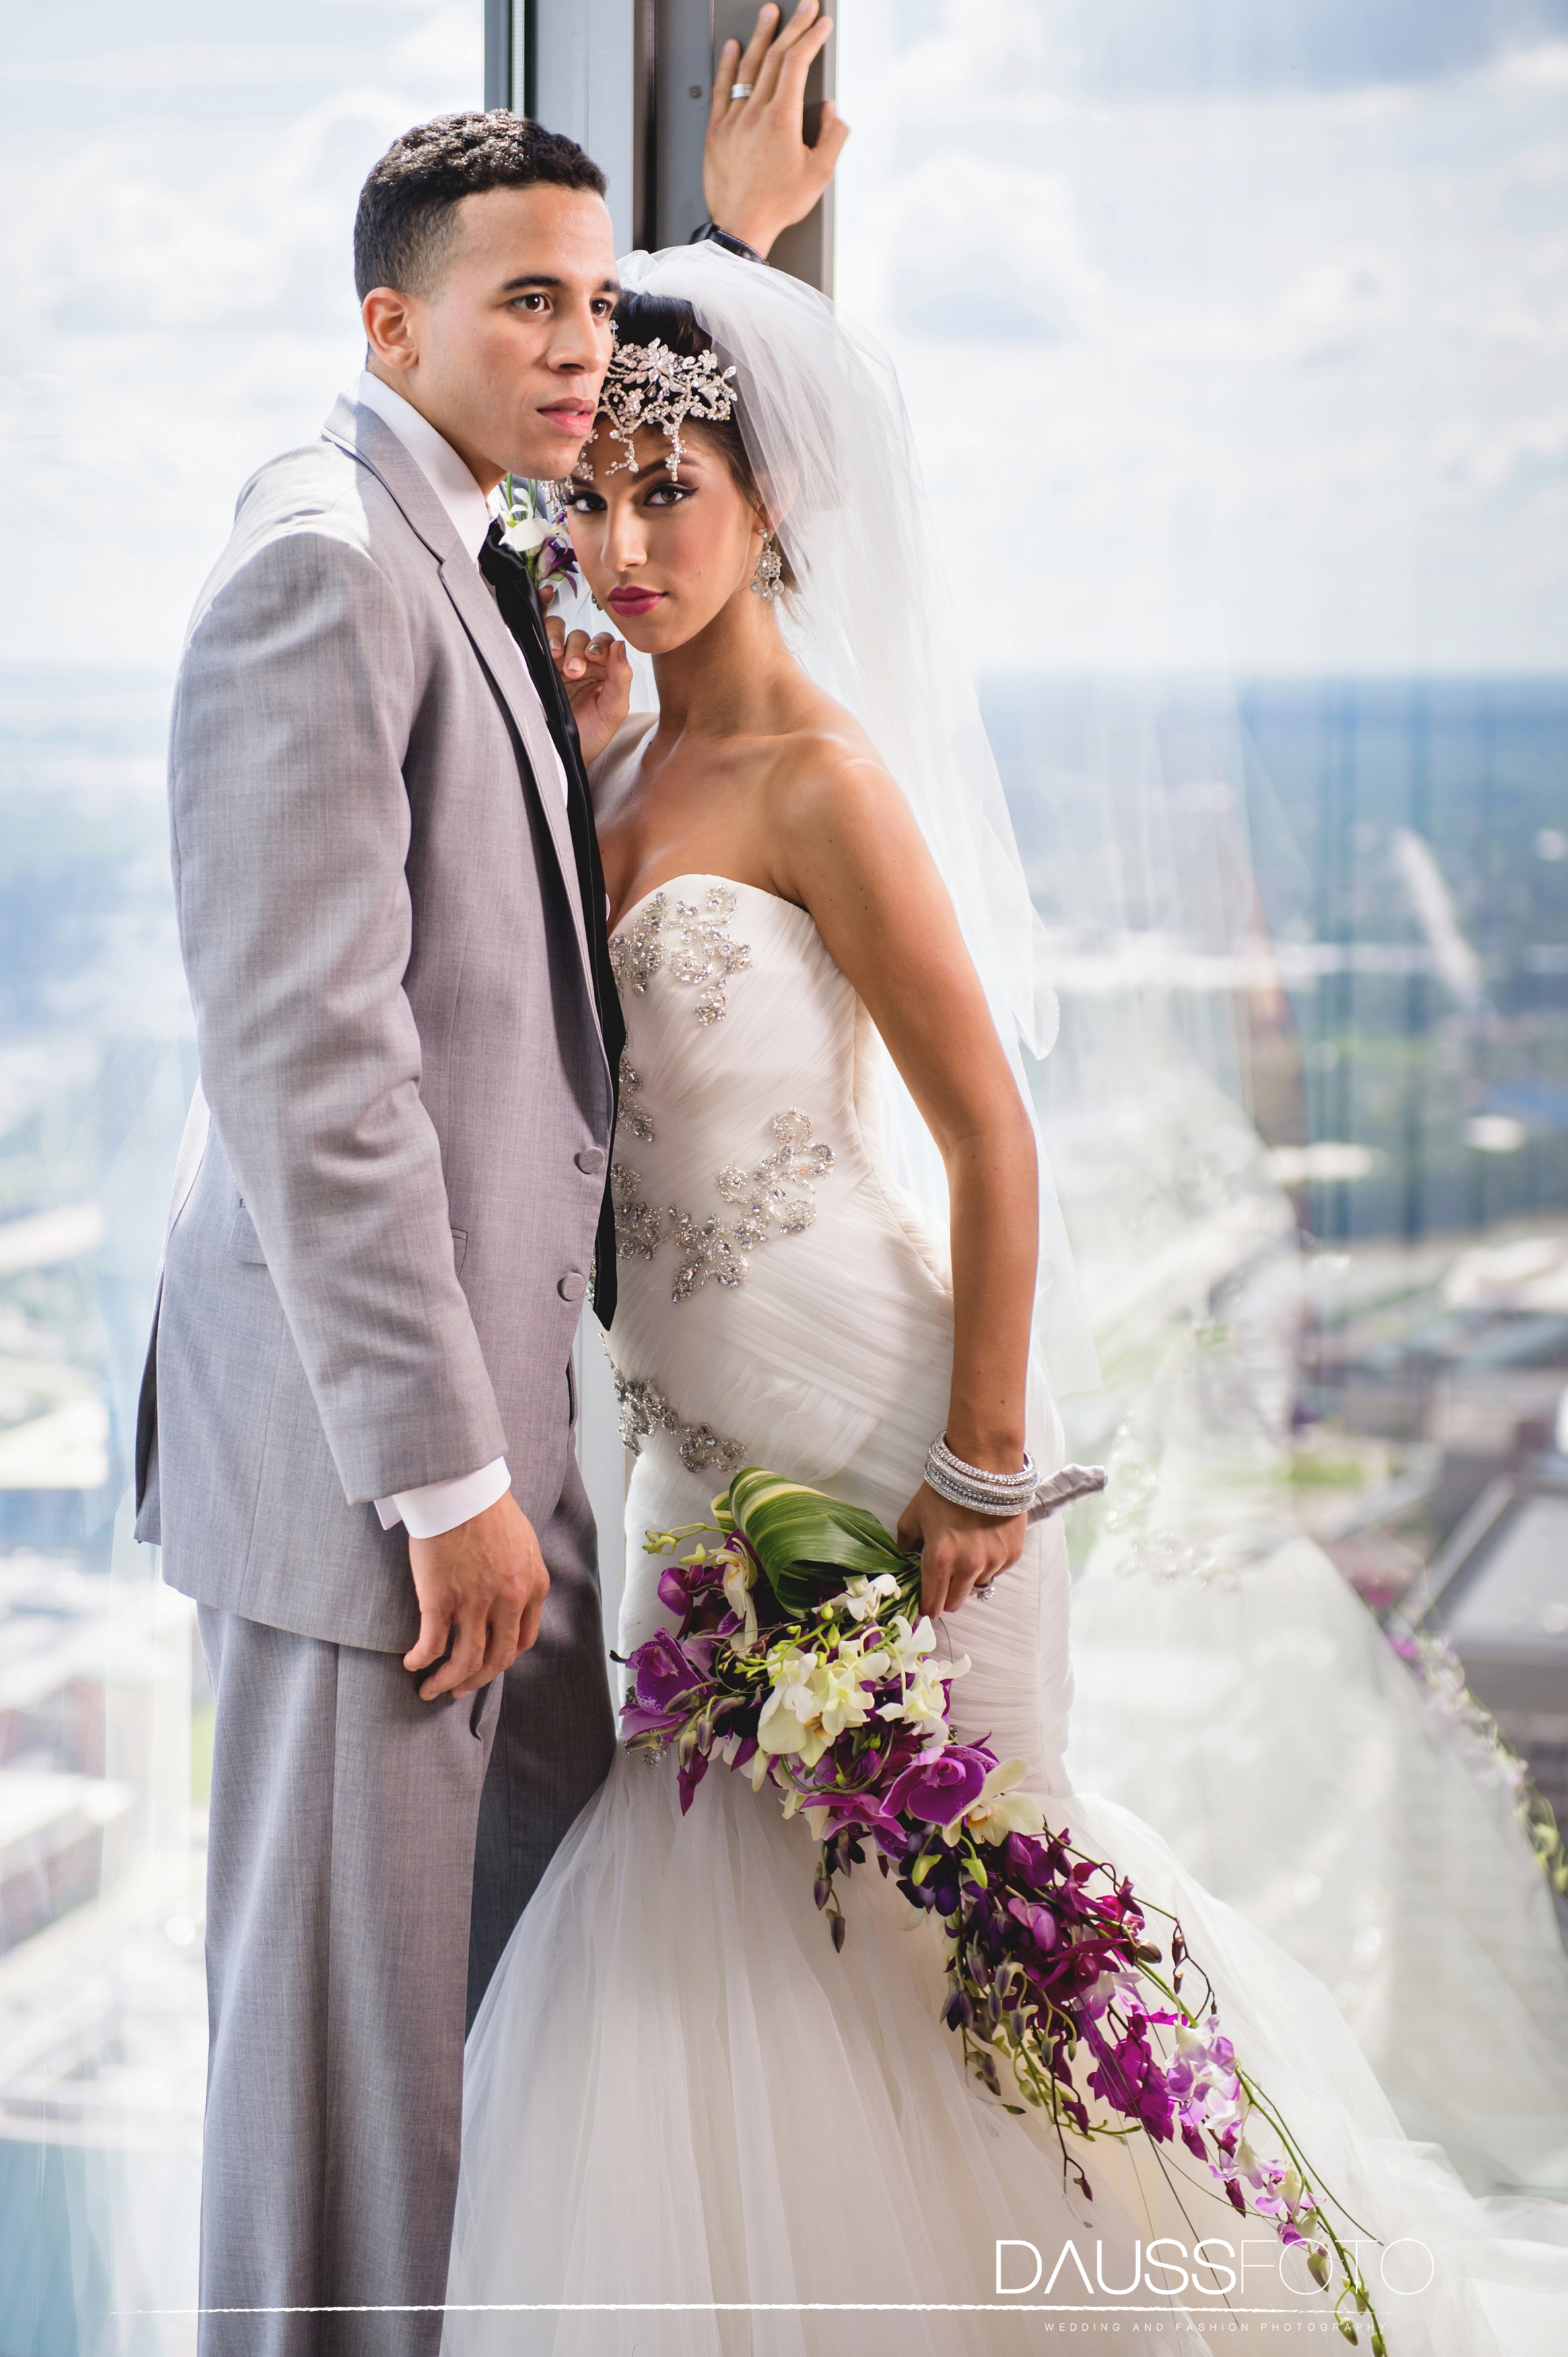 DaussFOTO_20150721_055_Indiana Wedding Photographer.jpg